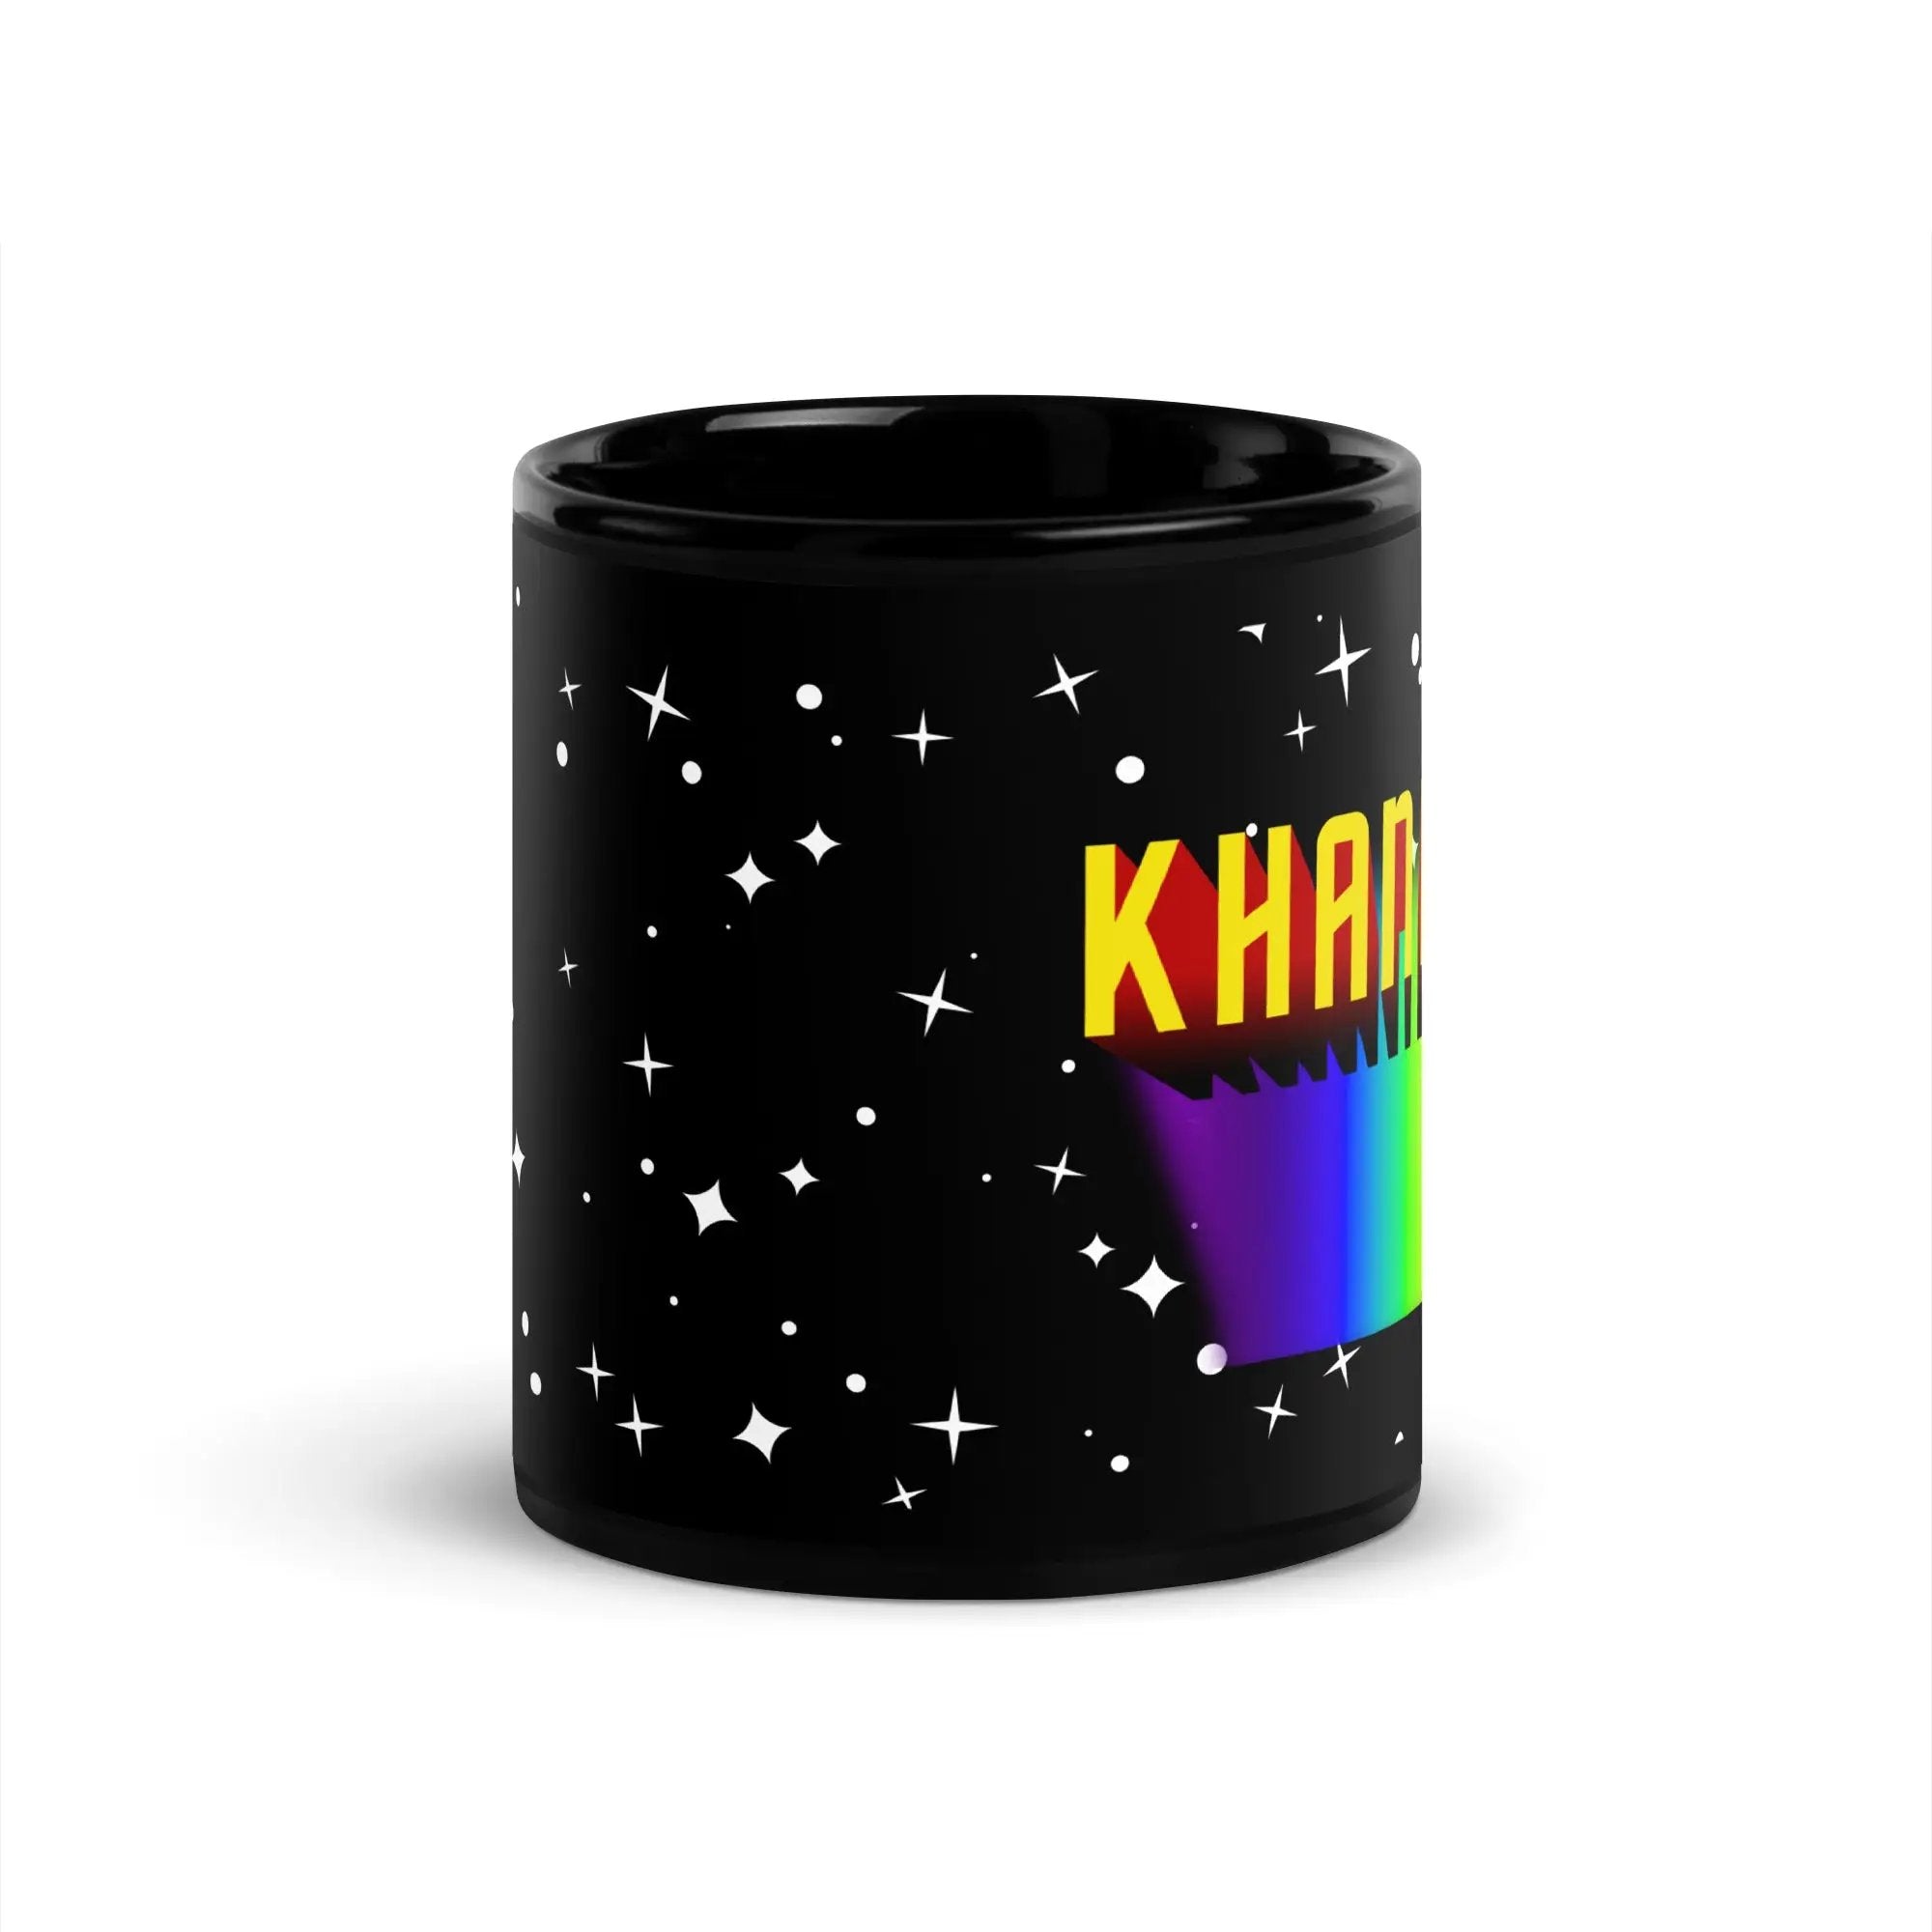 a black coffee mug with a rainbow on it